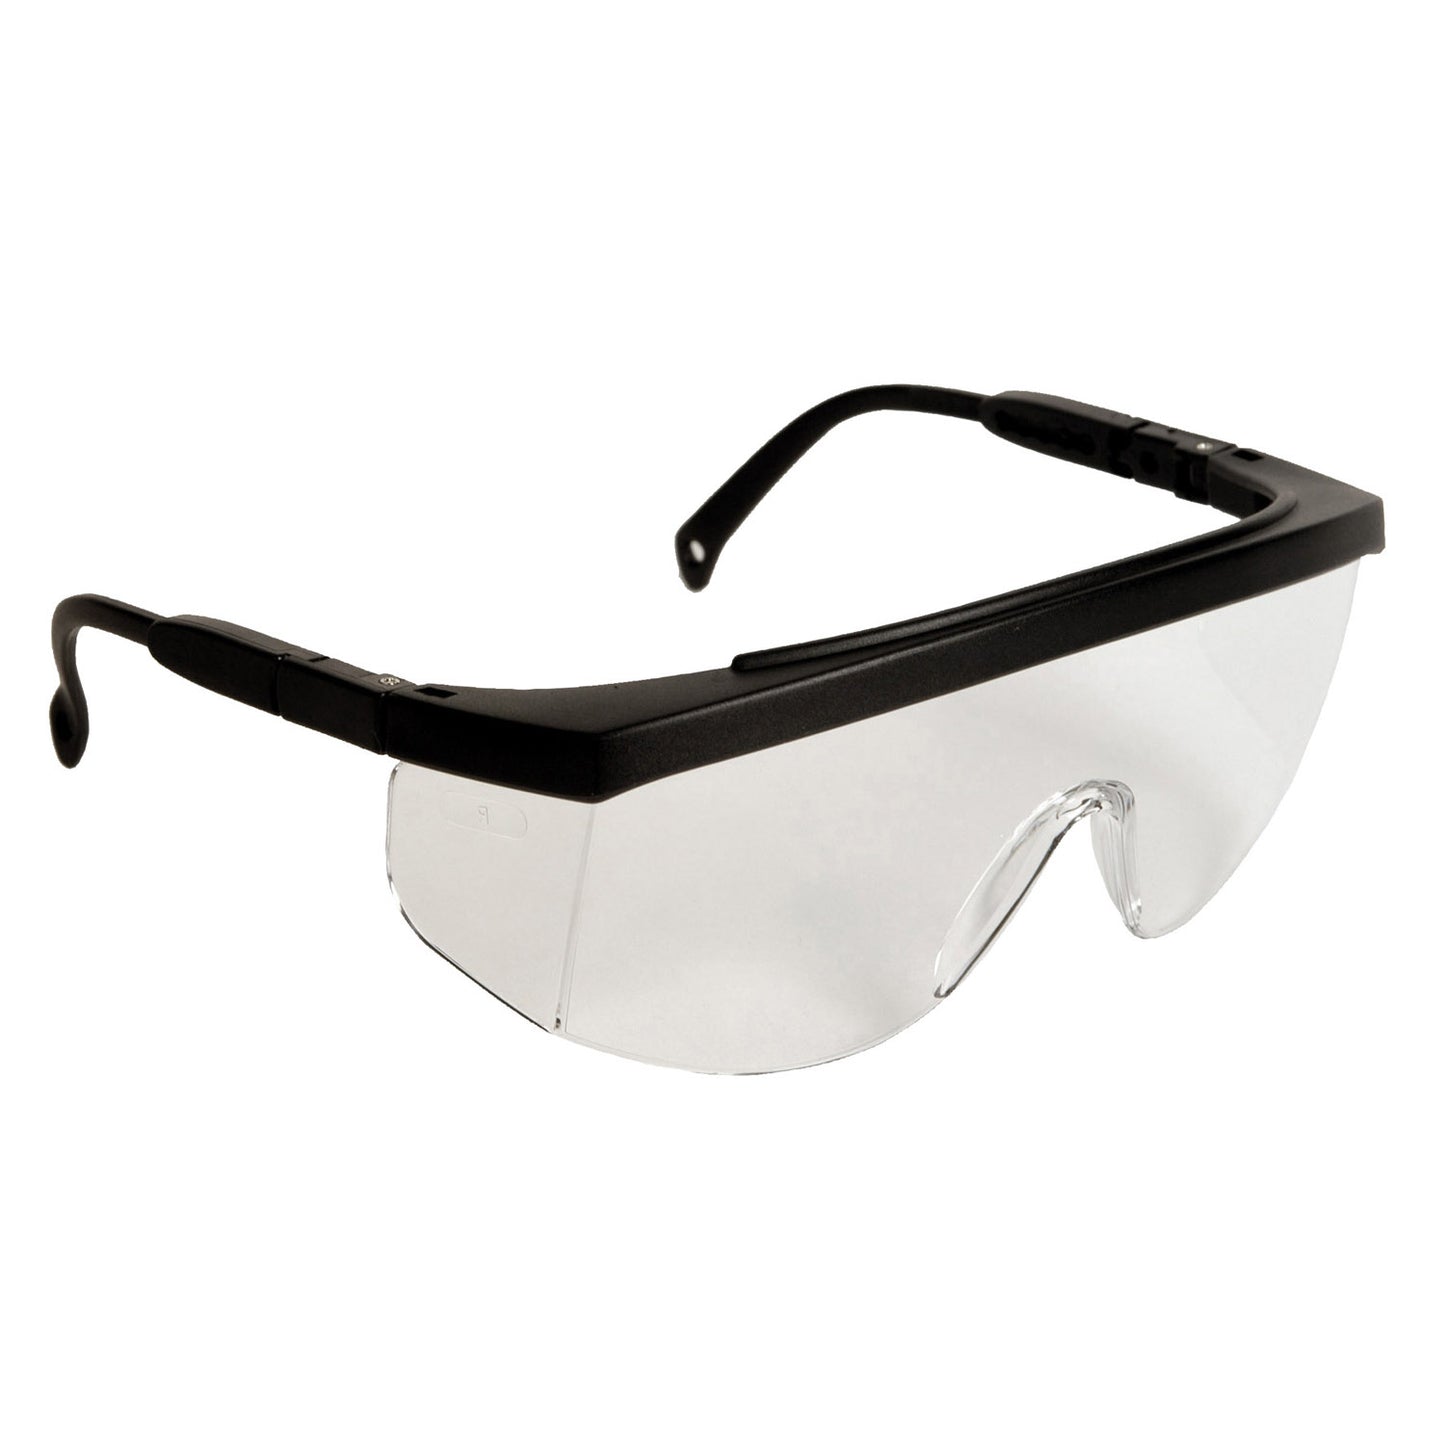 Radians G4 Safety Eyewear